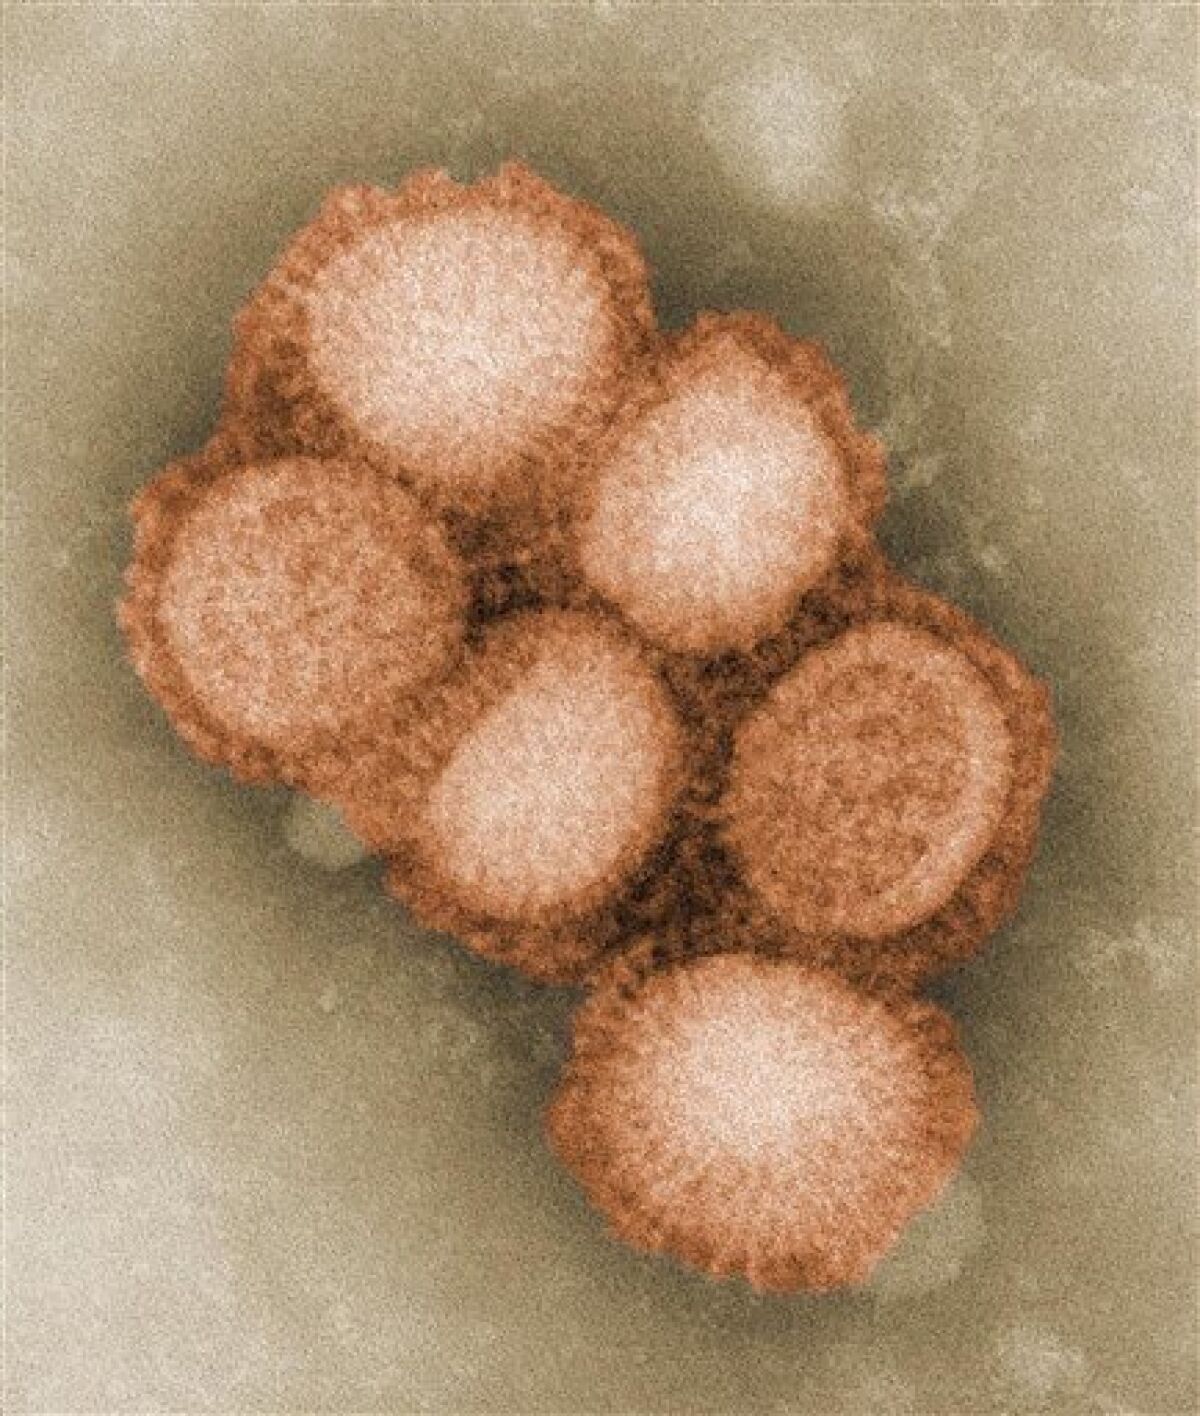 A microscope image of the swine flu virus from 2009.